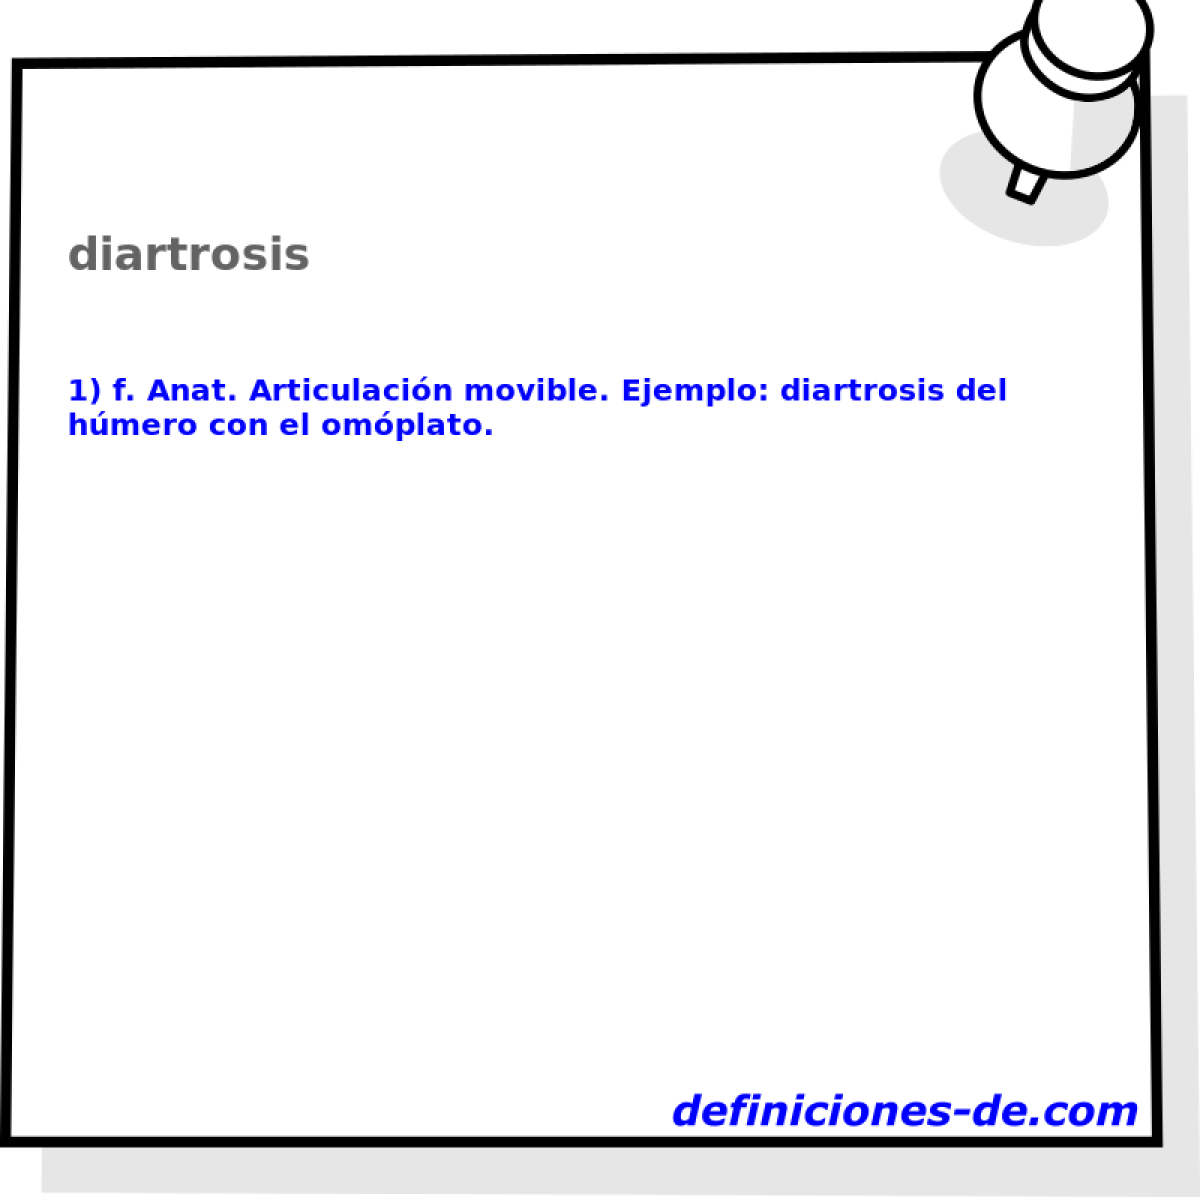 diartrosis 